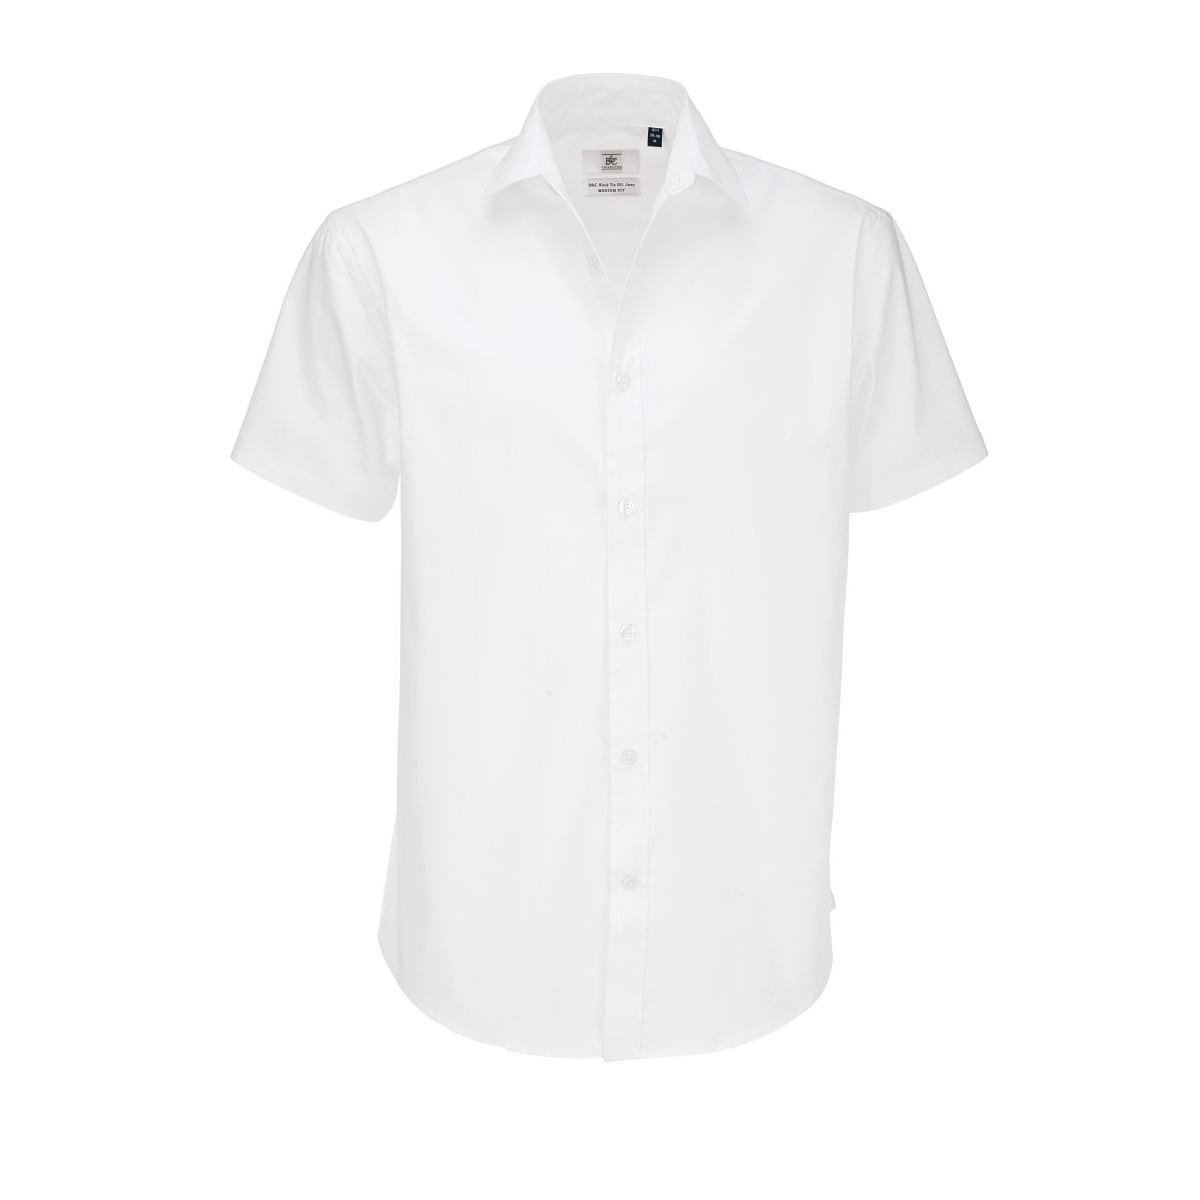 Pánská elastická popelínová košile B&C Black Tie s krátkým rukávem - bílá, M